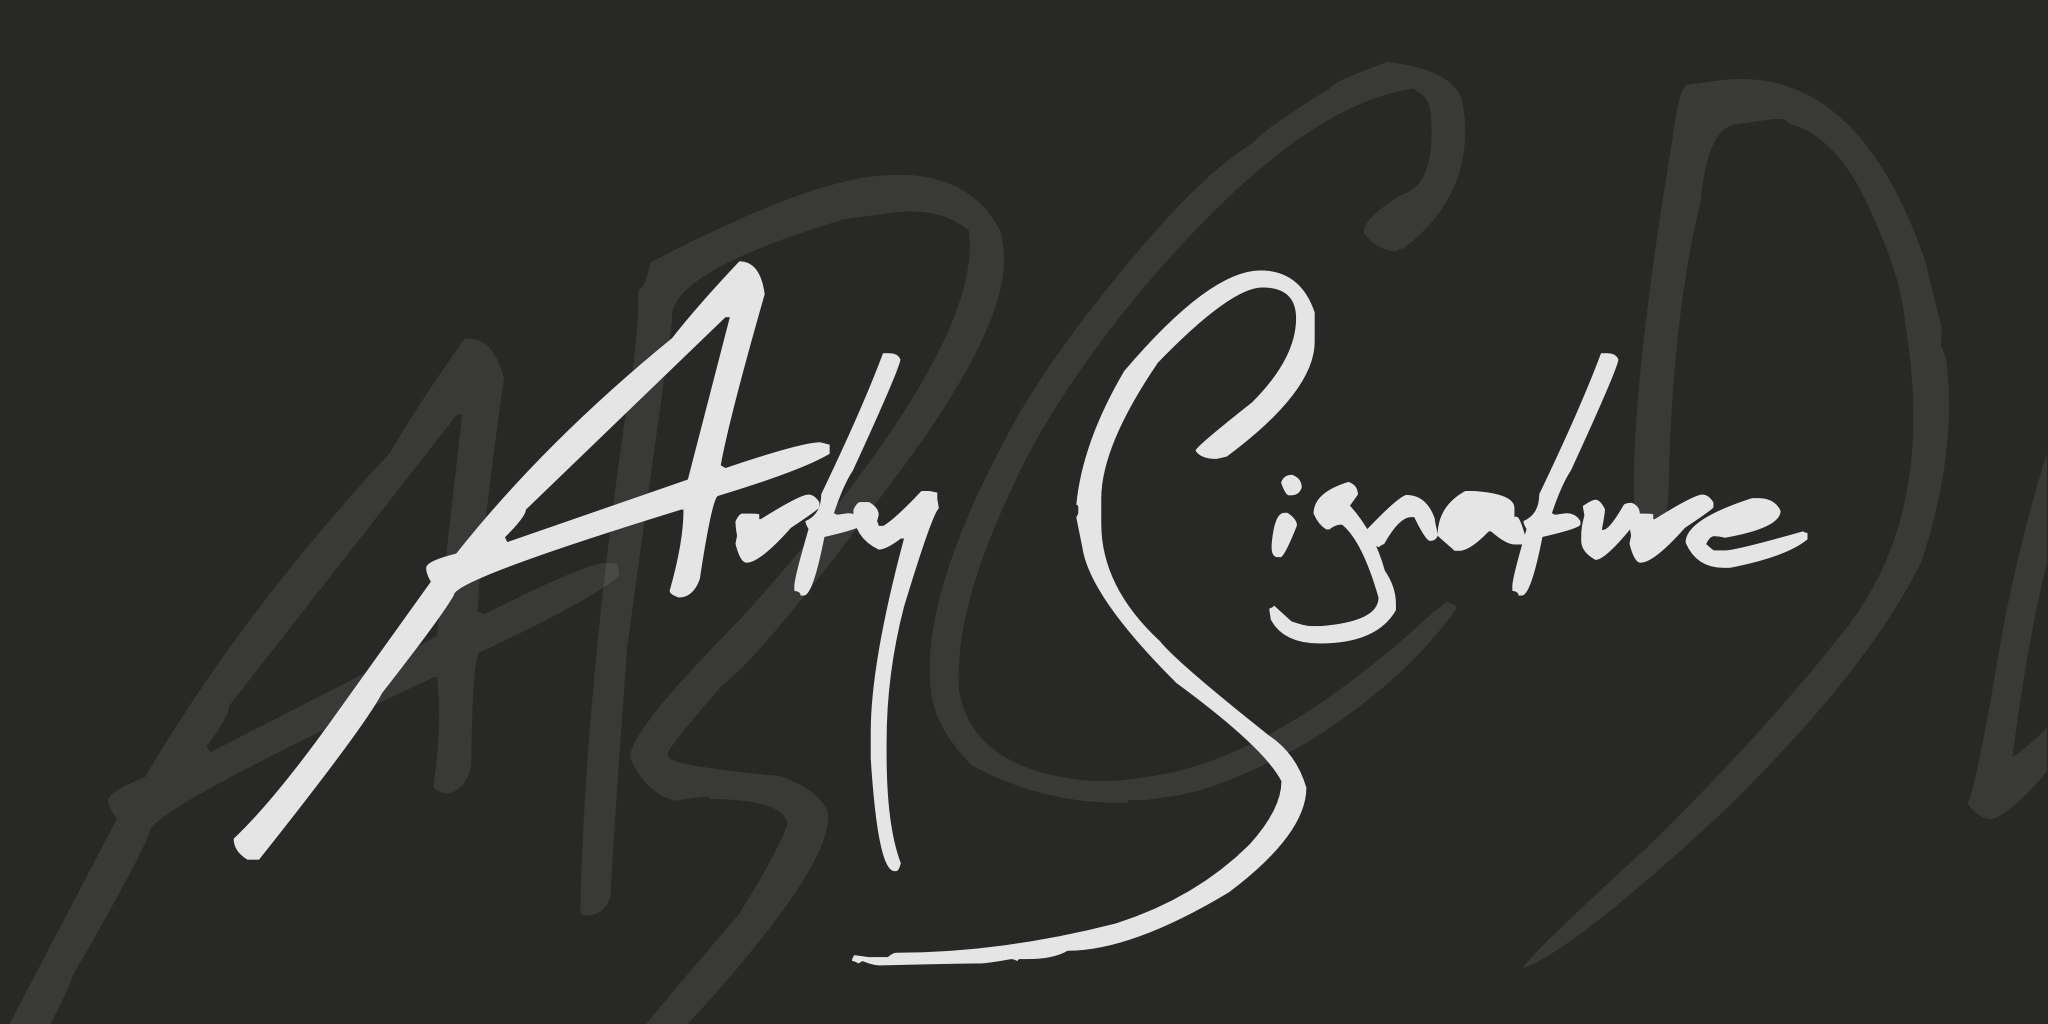 Arty Signature